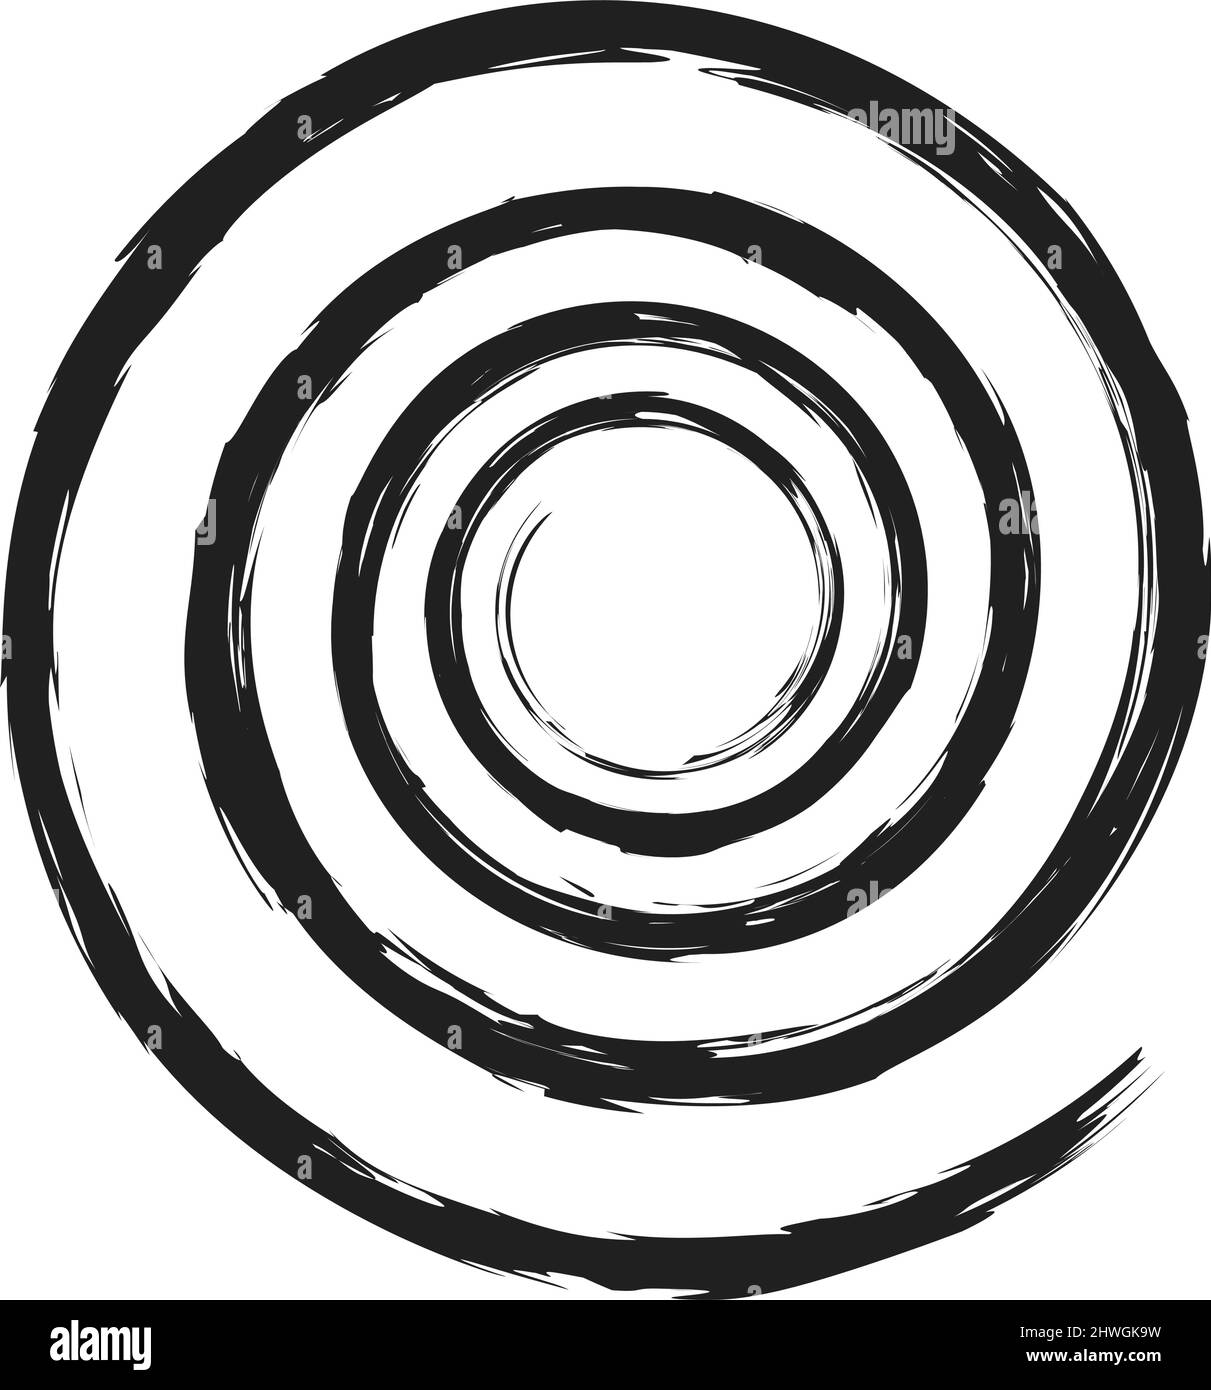 Spirals, swirl, twirl design element vector - stock vector illustration,  clip-art graphics Stock Vector Image & Art - Alamy